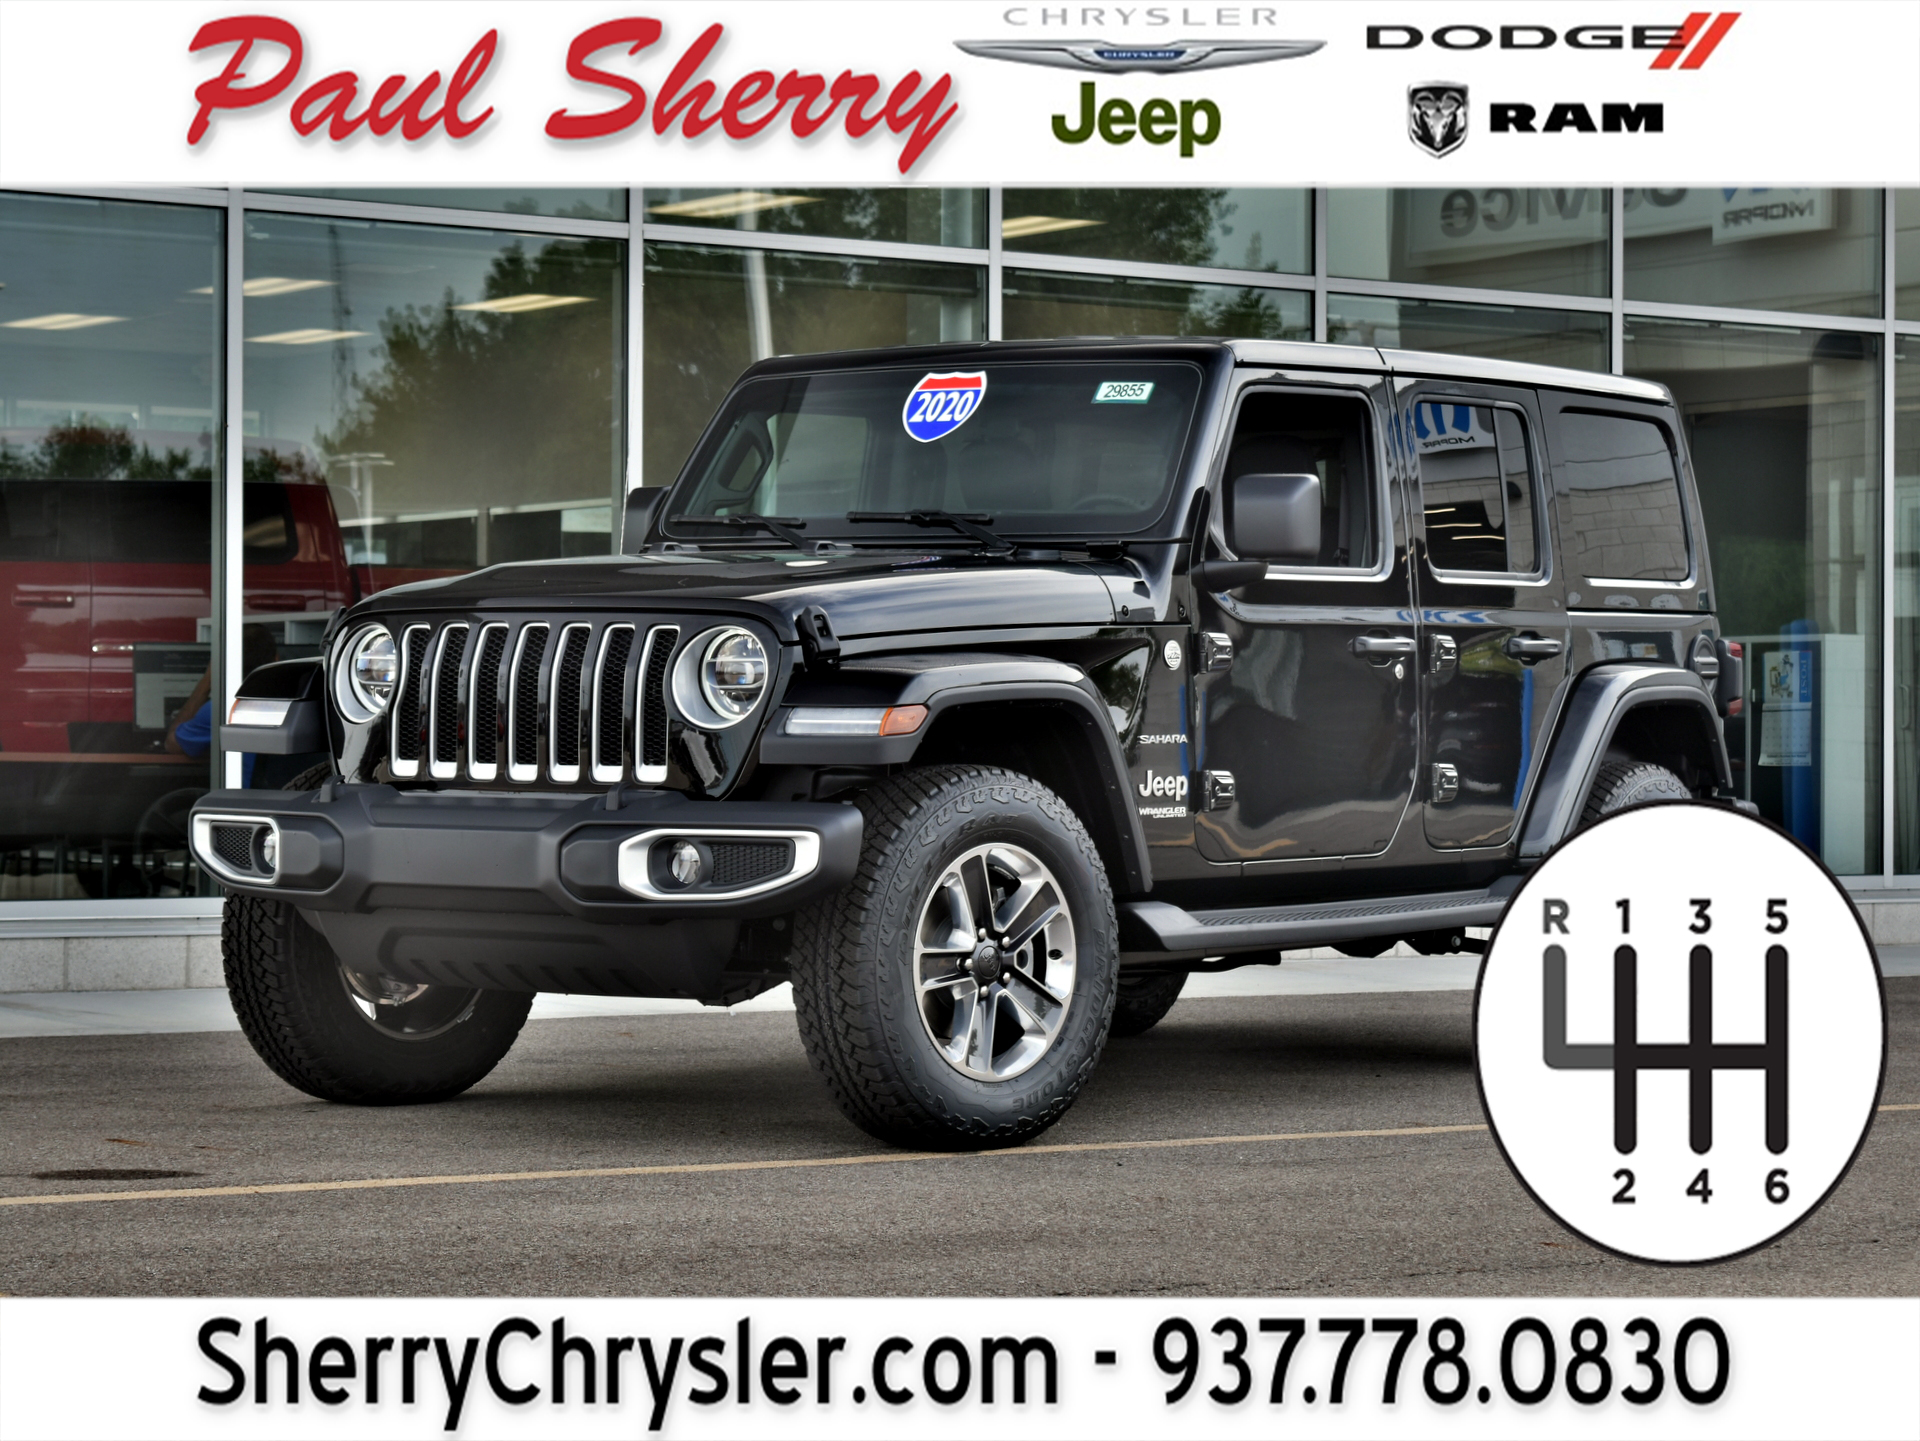 2020 Jeep Wrangler Unlimited Sahara | 29855T - Paul Sherry Chrysler Dodge  Jeep RAMPaul Sherry Chrysler Dodge Jeep RAM